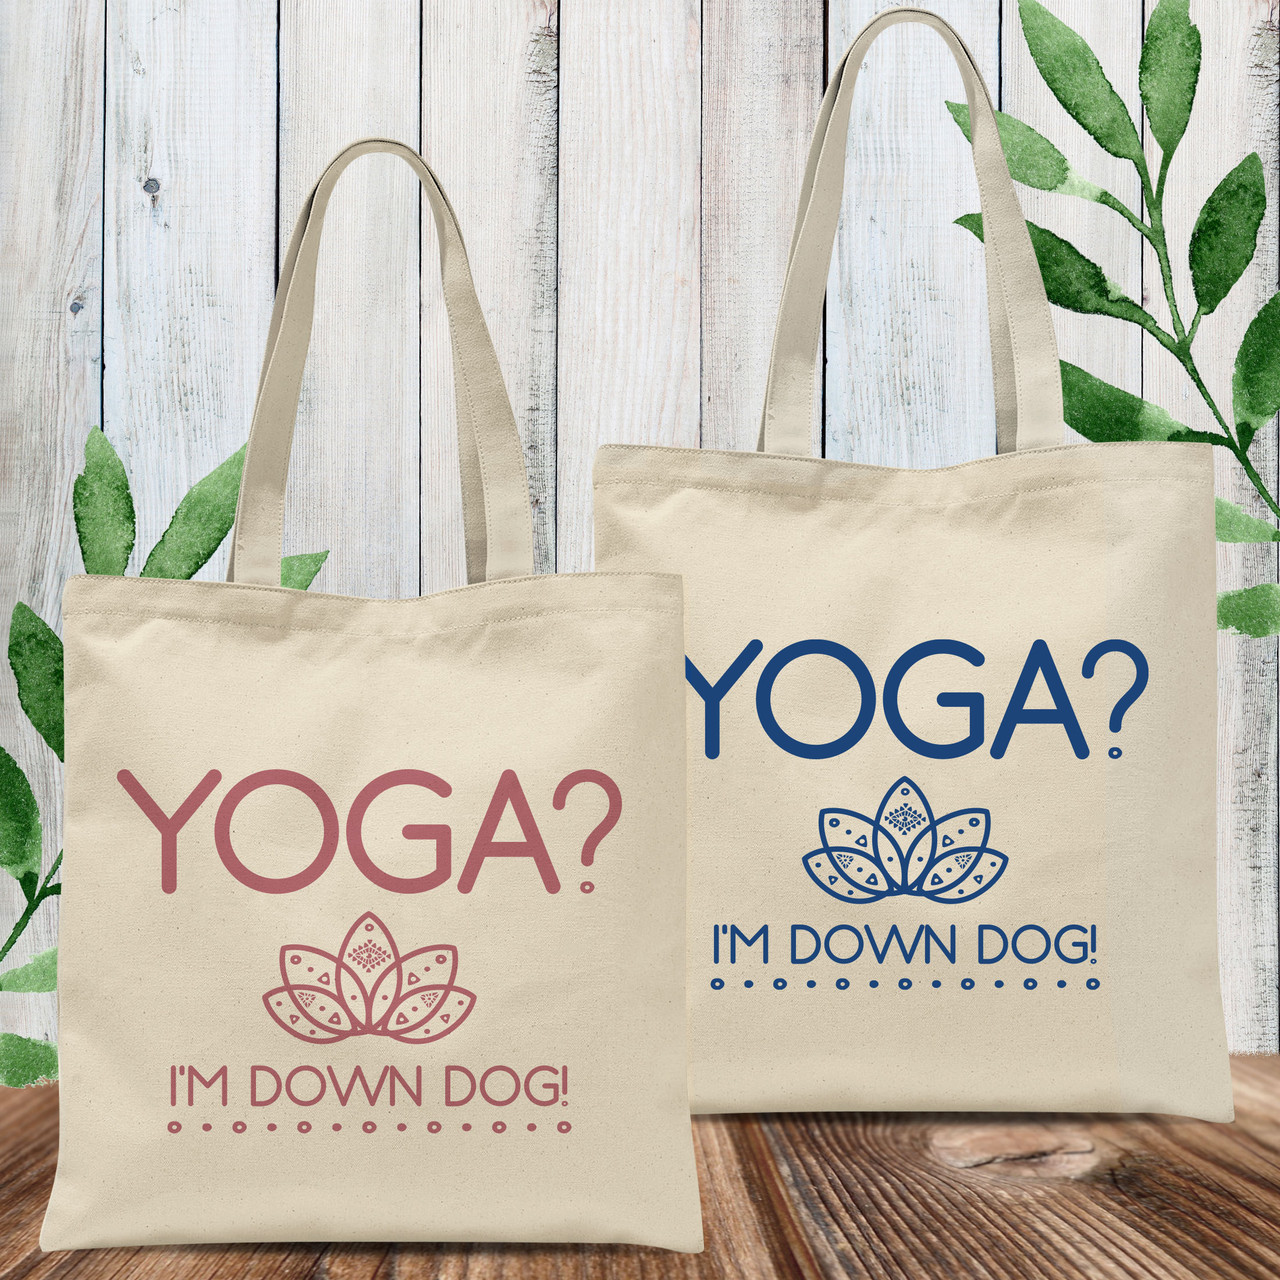 Yoga? I'm Down Dog - Personalized Yoga Tote Bag